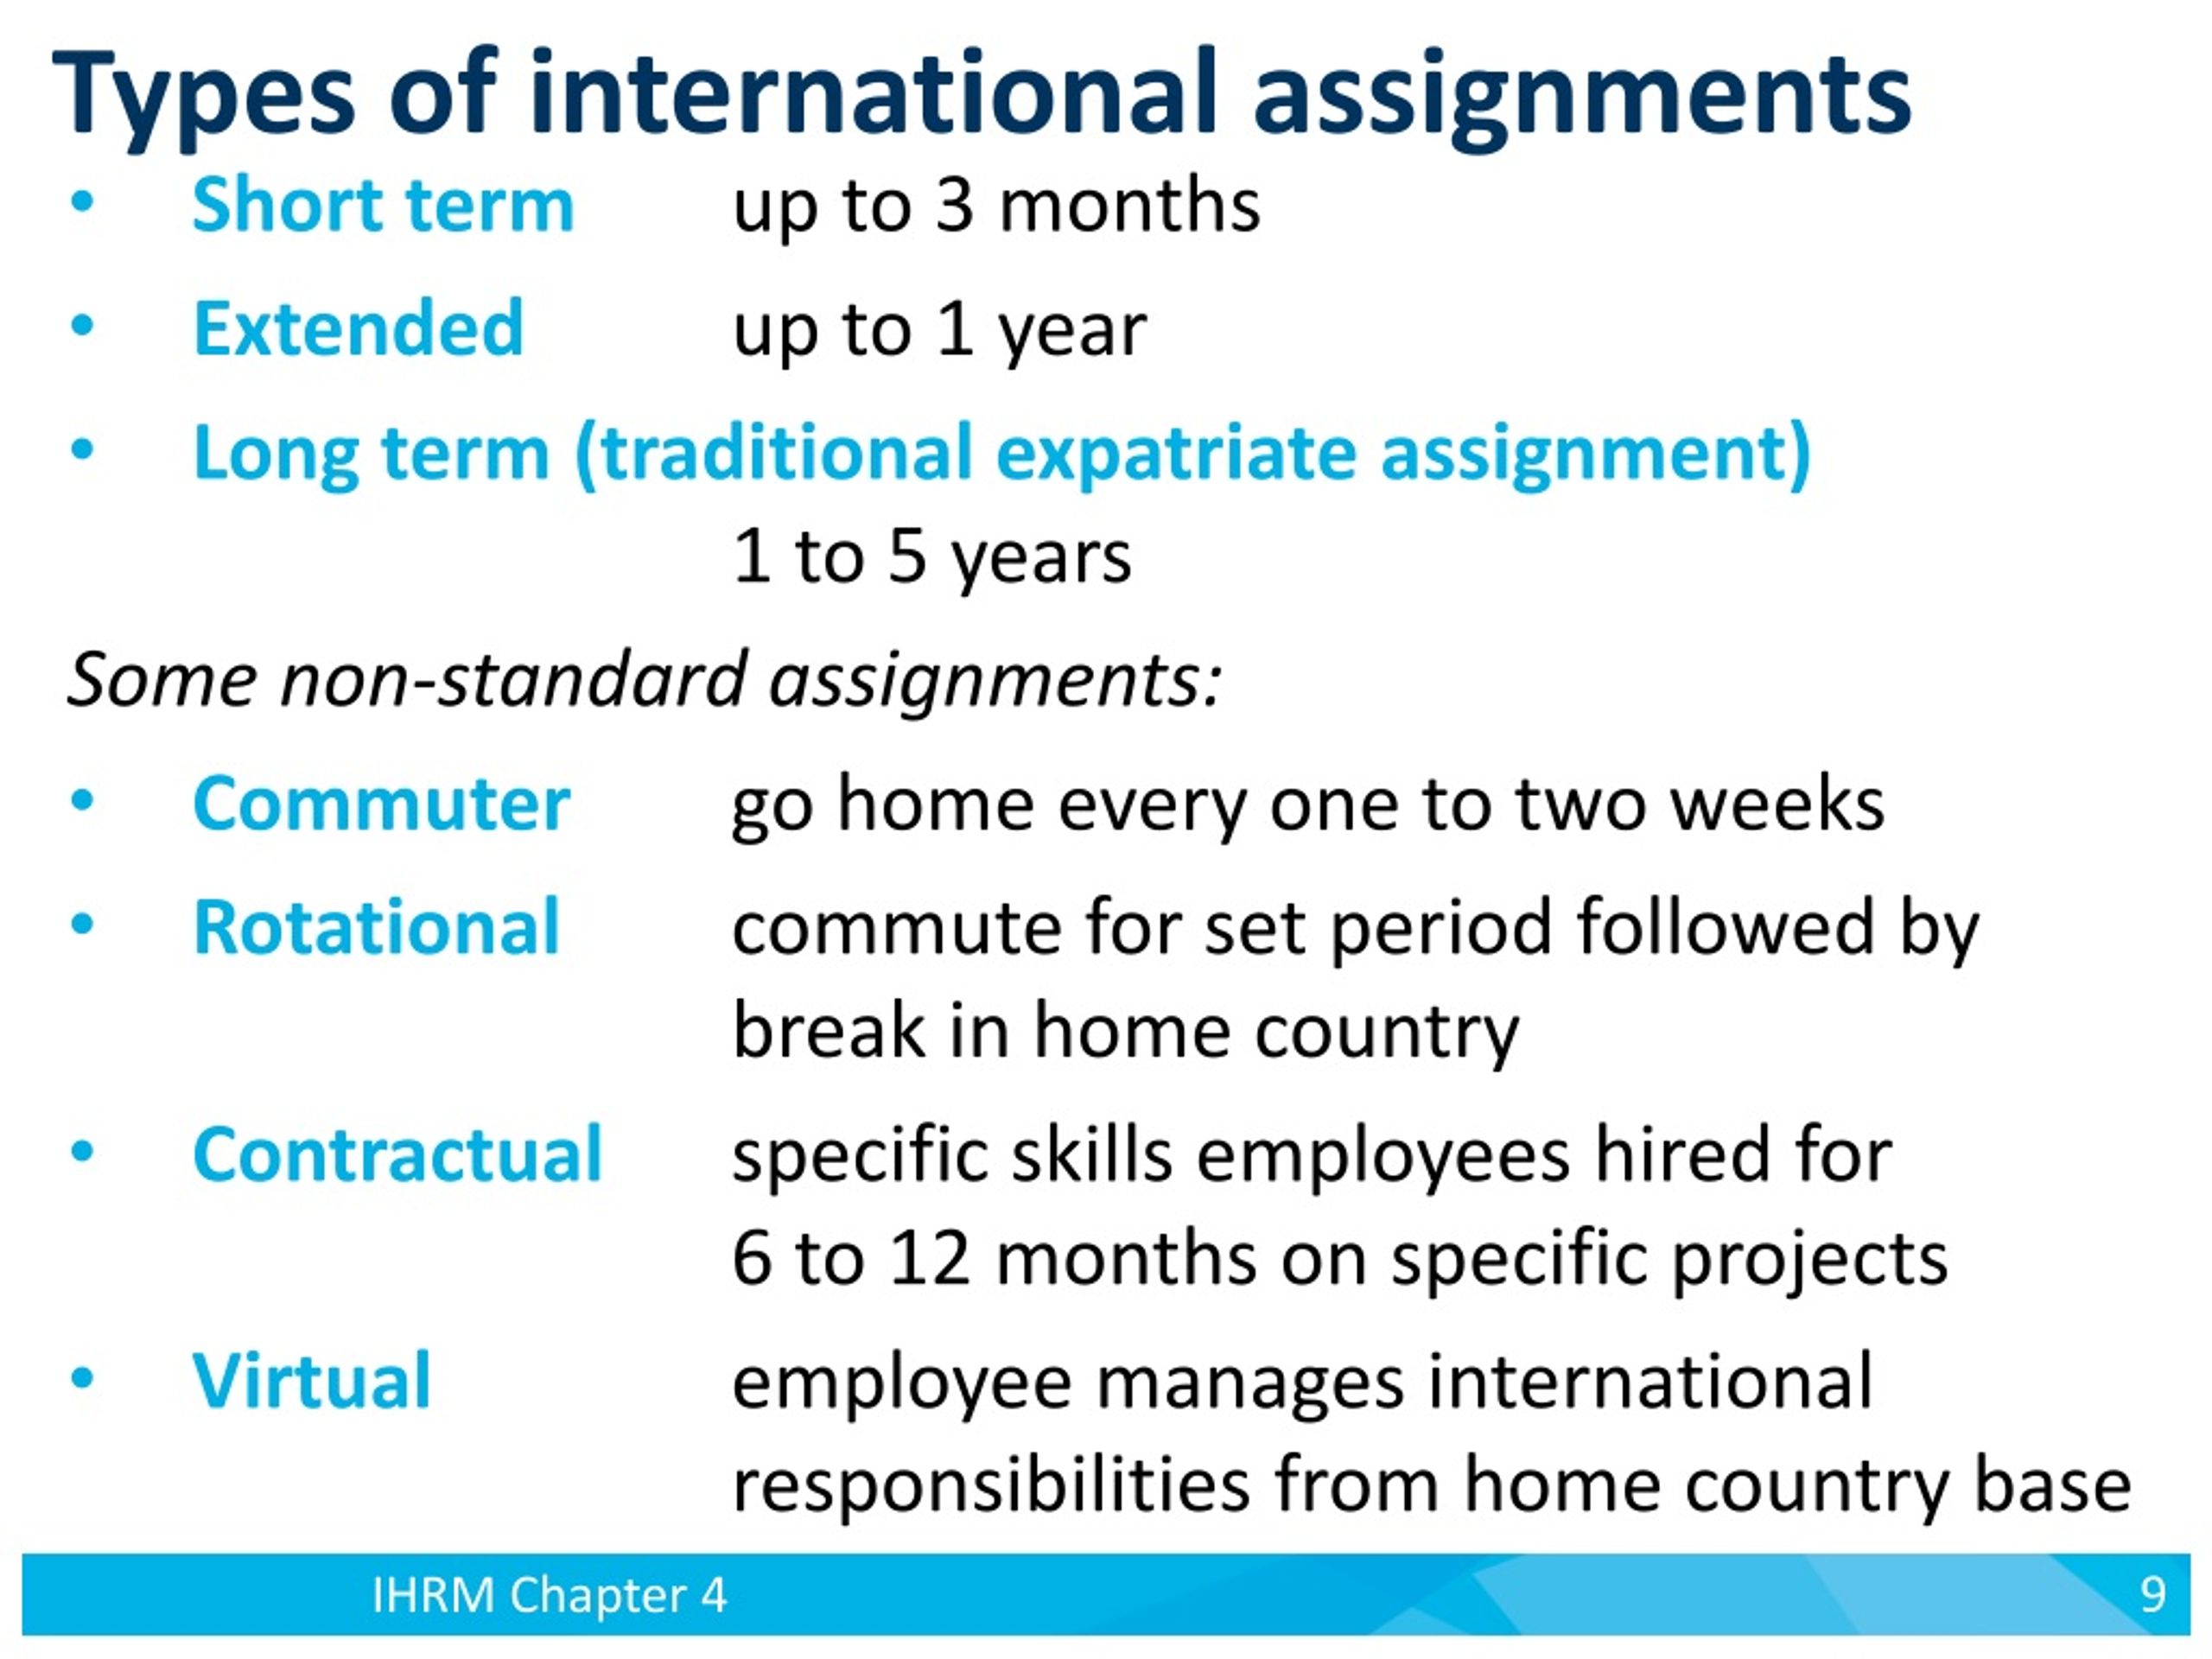 benefits of international assignments as a developmental tool